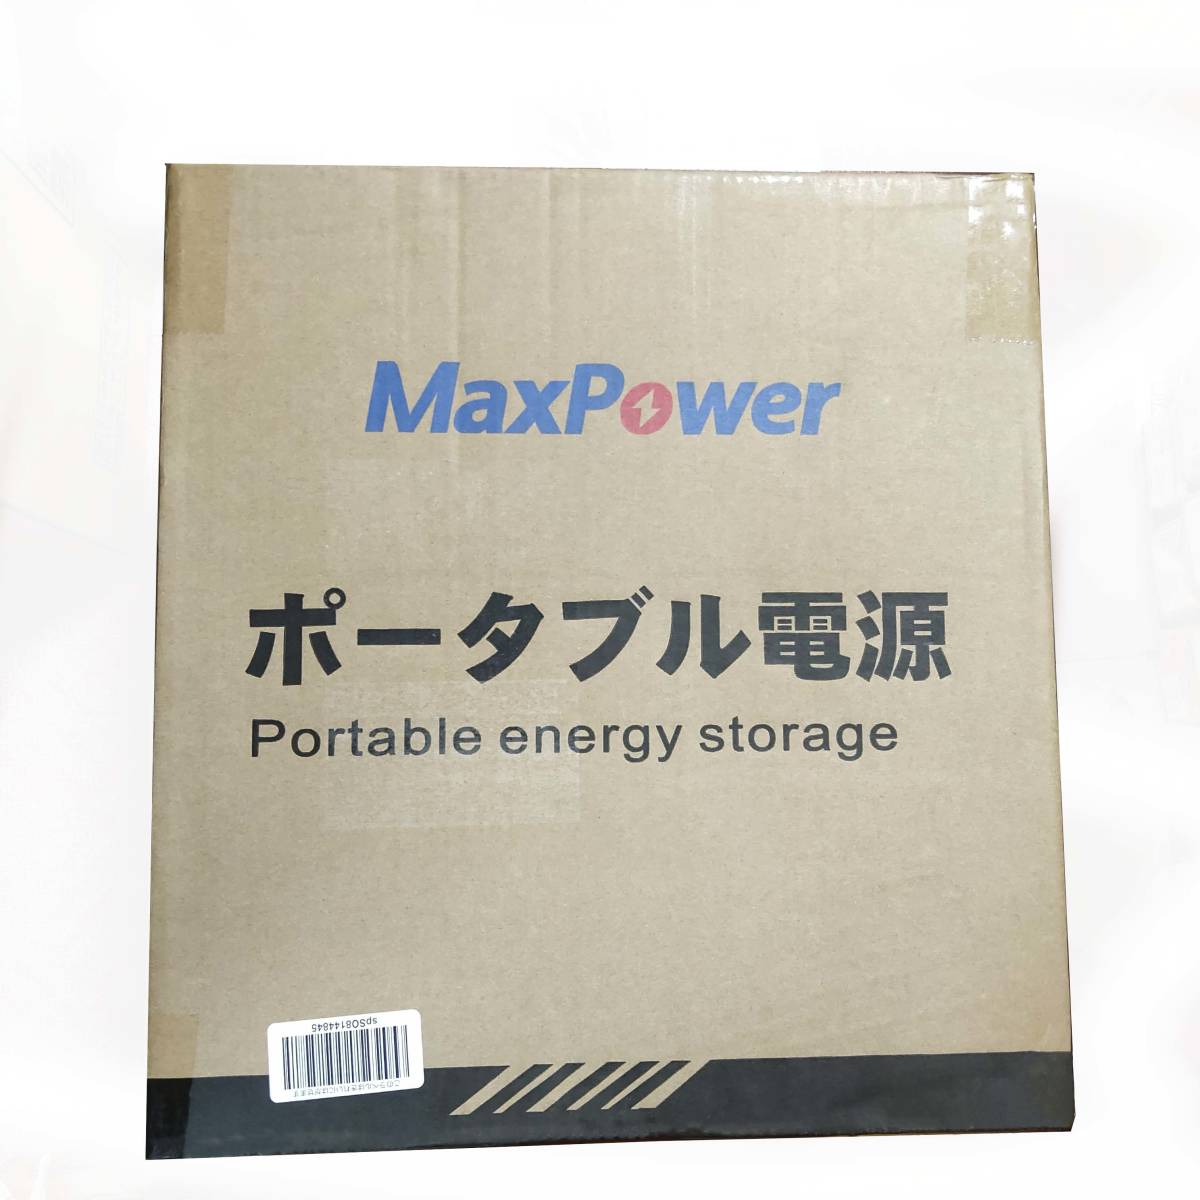 MaxPower MP1300 静音/軽量 ポータブル電源 313500mAh/1160Wh 超速充電